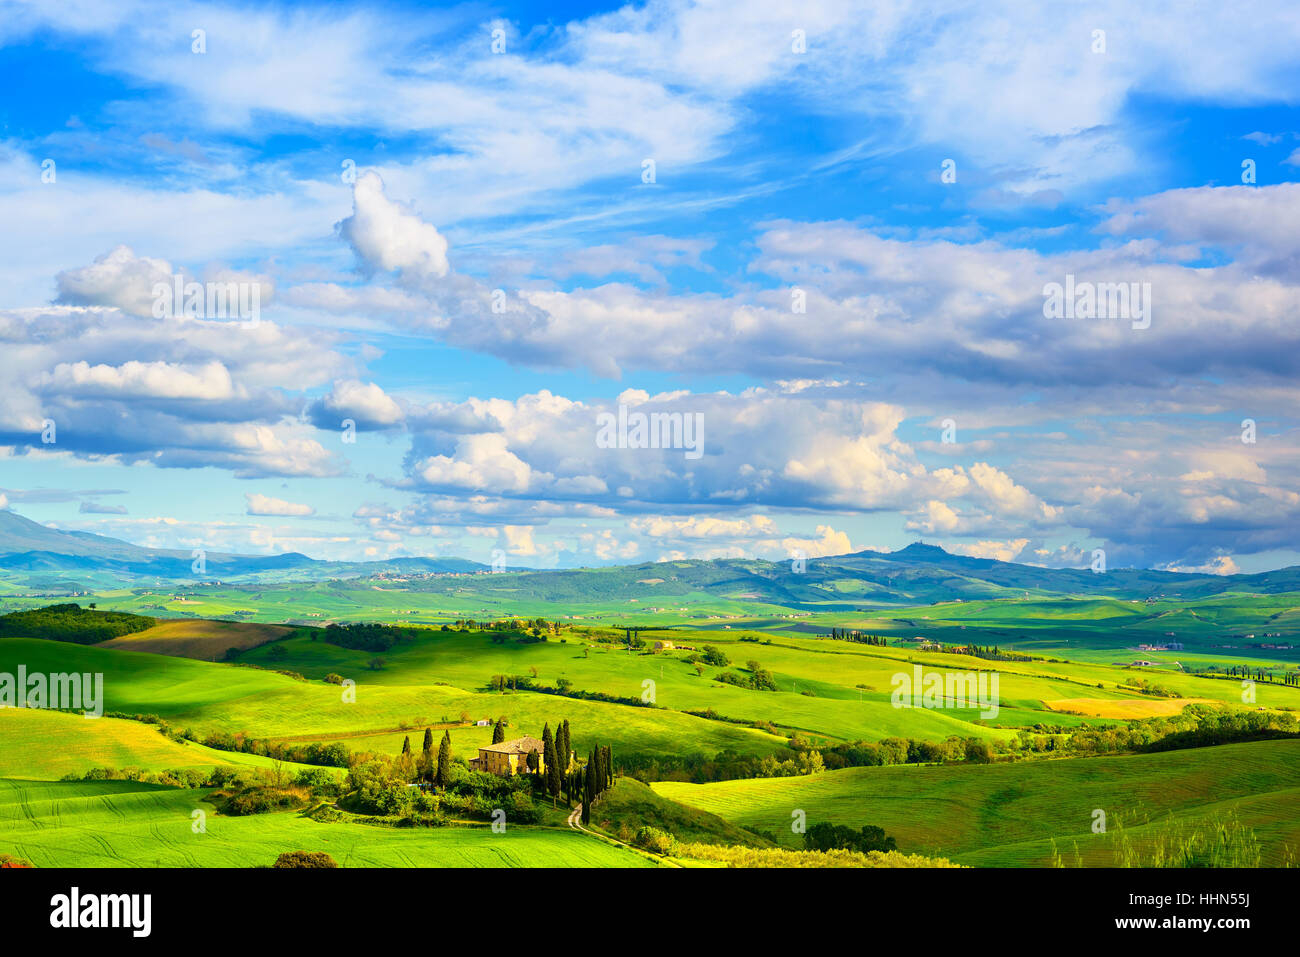 Toskana, Ackerland und Zypresse Bäume Land Landschaft, grüne Felder. San Quirico Orcia, Italien, Europa. Stockfoto